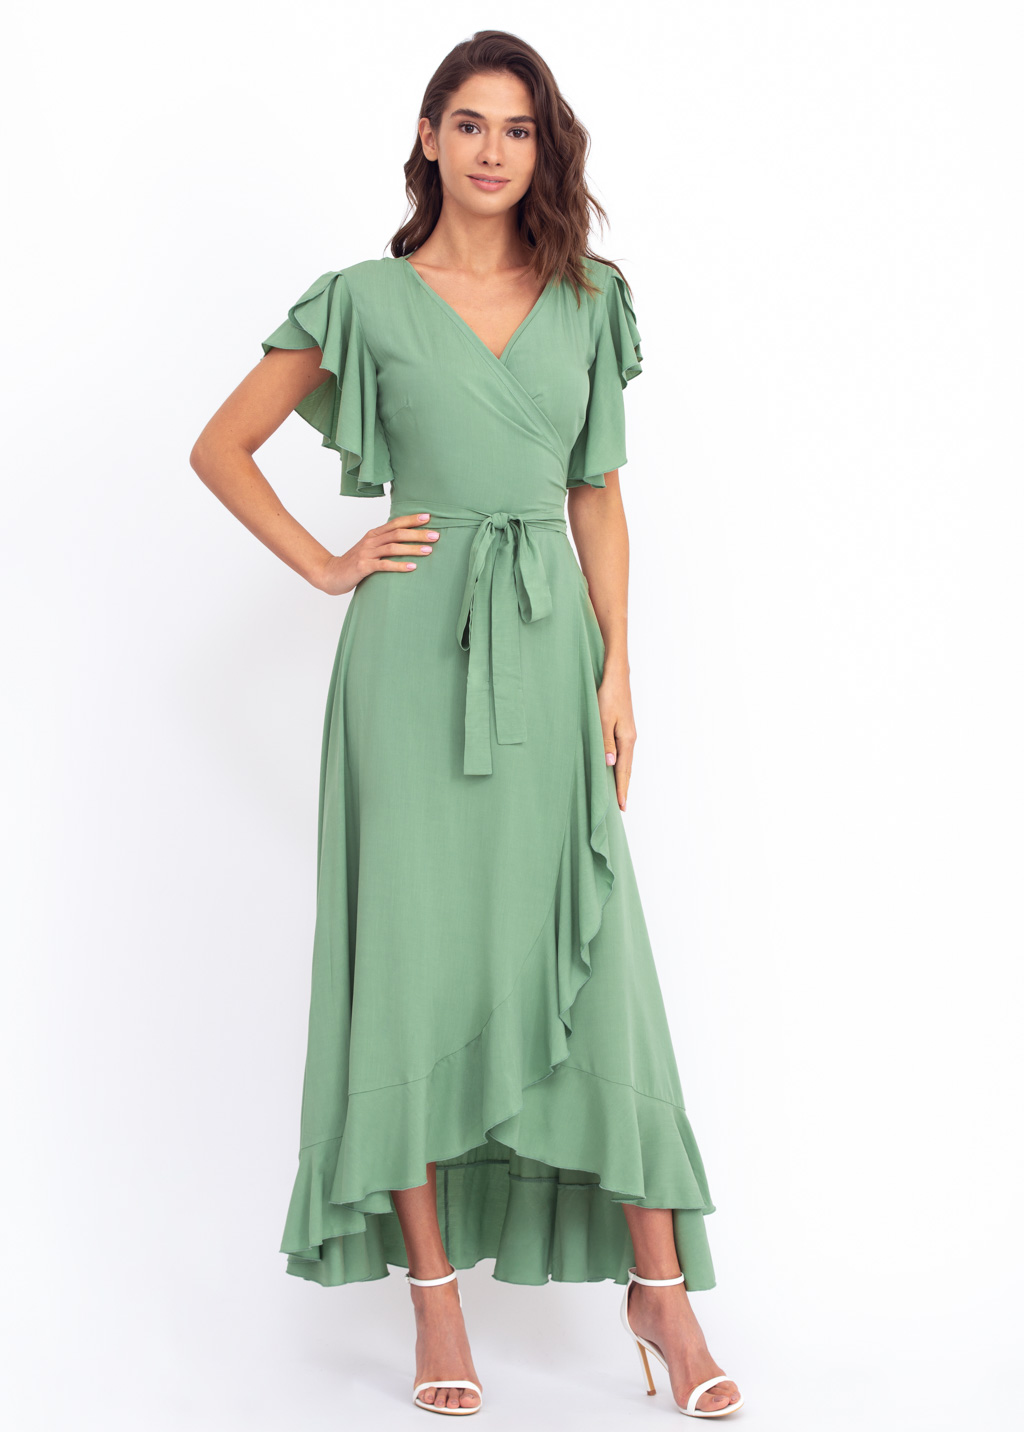 Sage green romantic wrap around dress